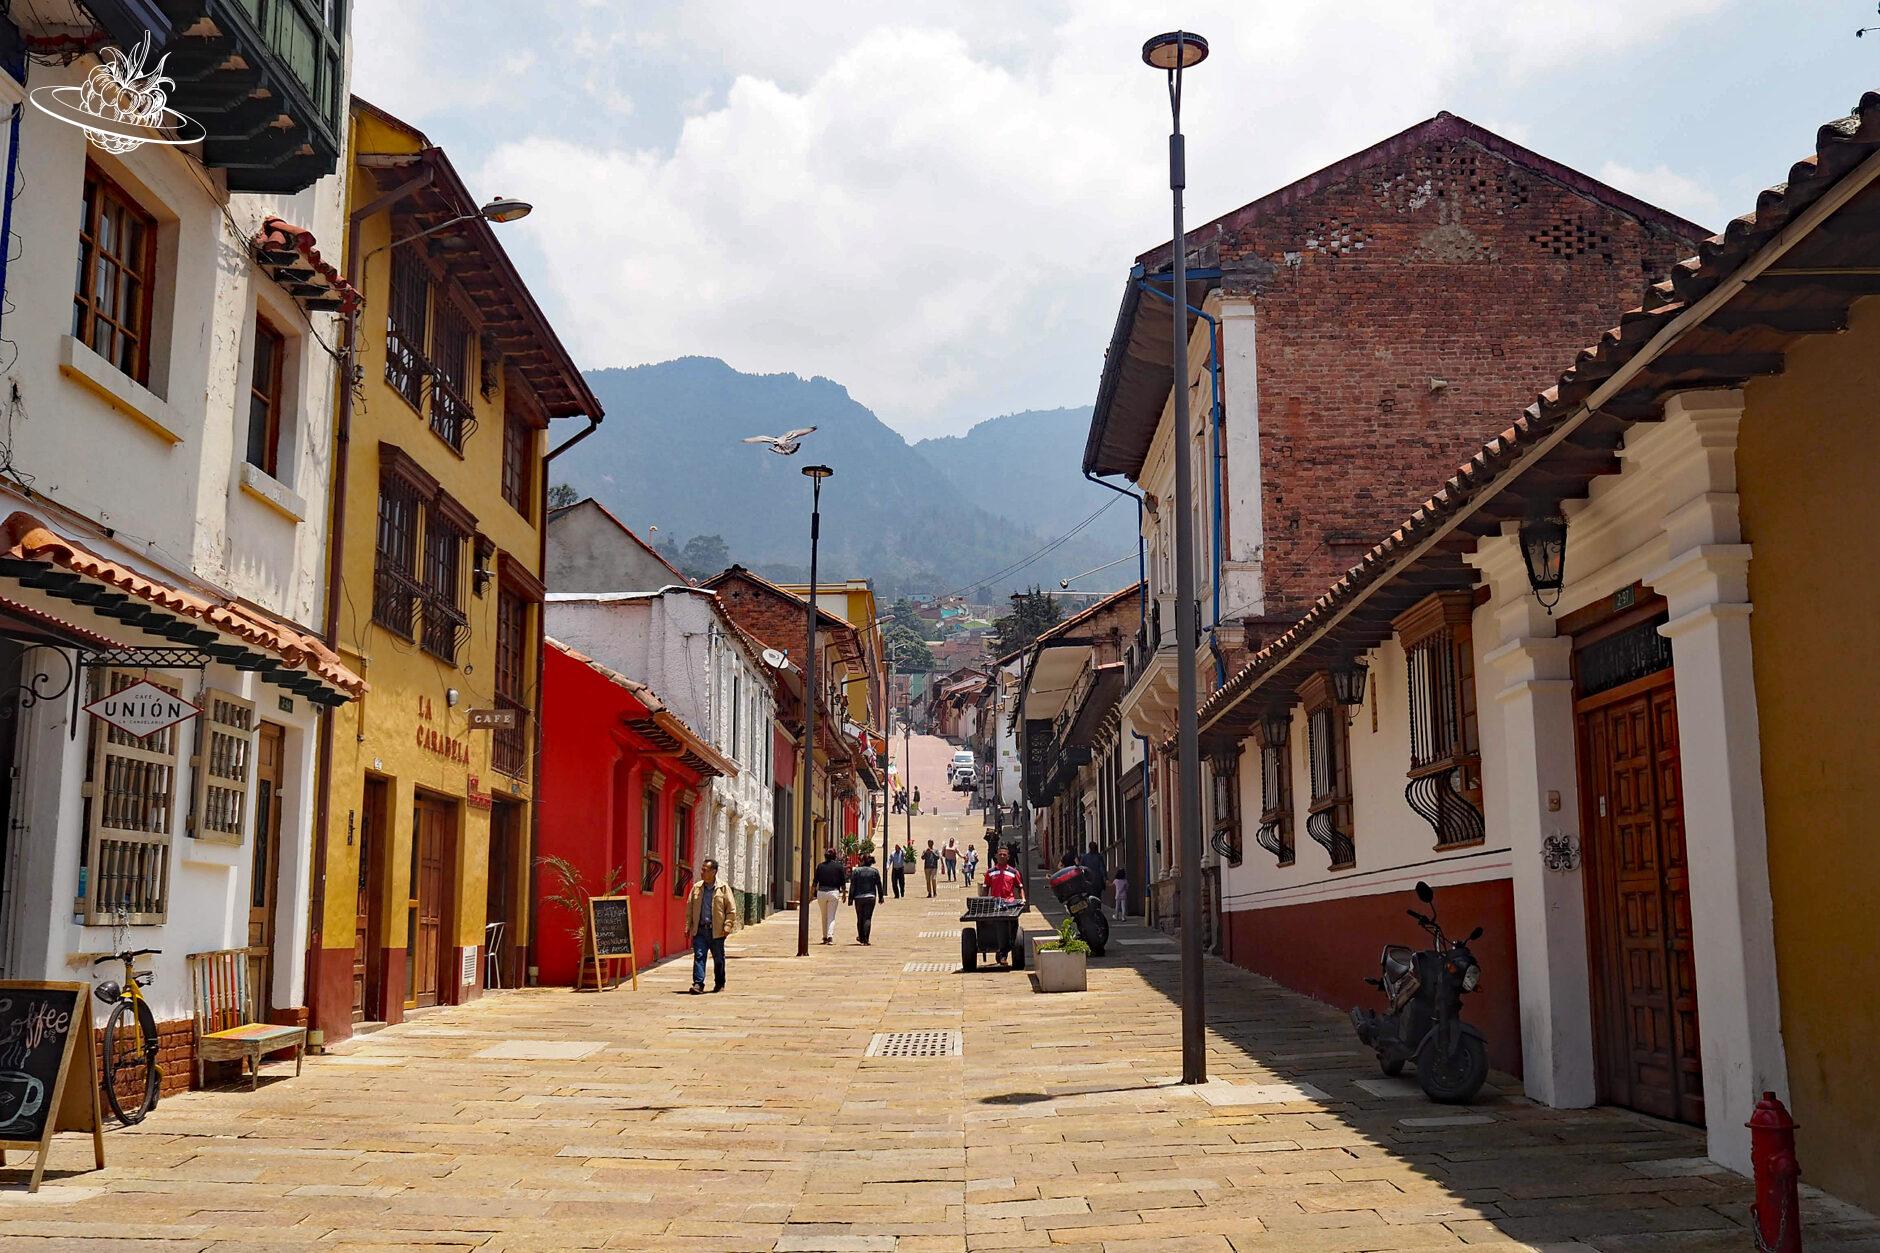 Gasse in Bogota mit Blick auf die Berge